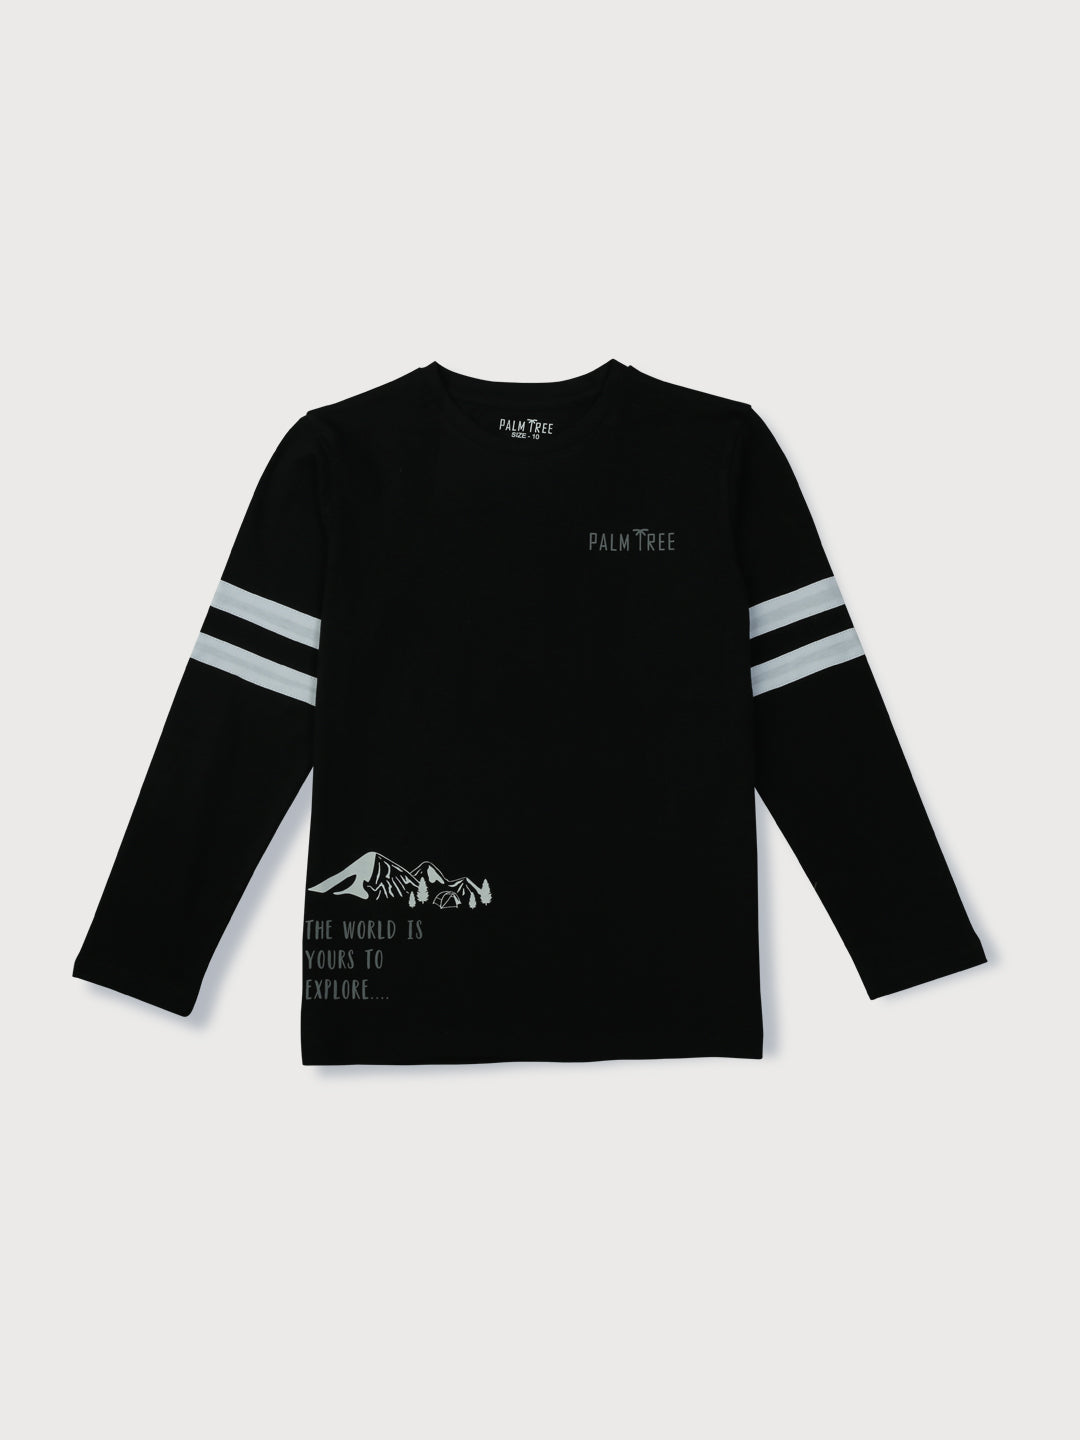 Boys Black Printed Knits T-Shirt